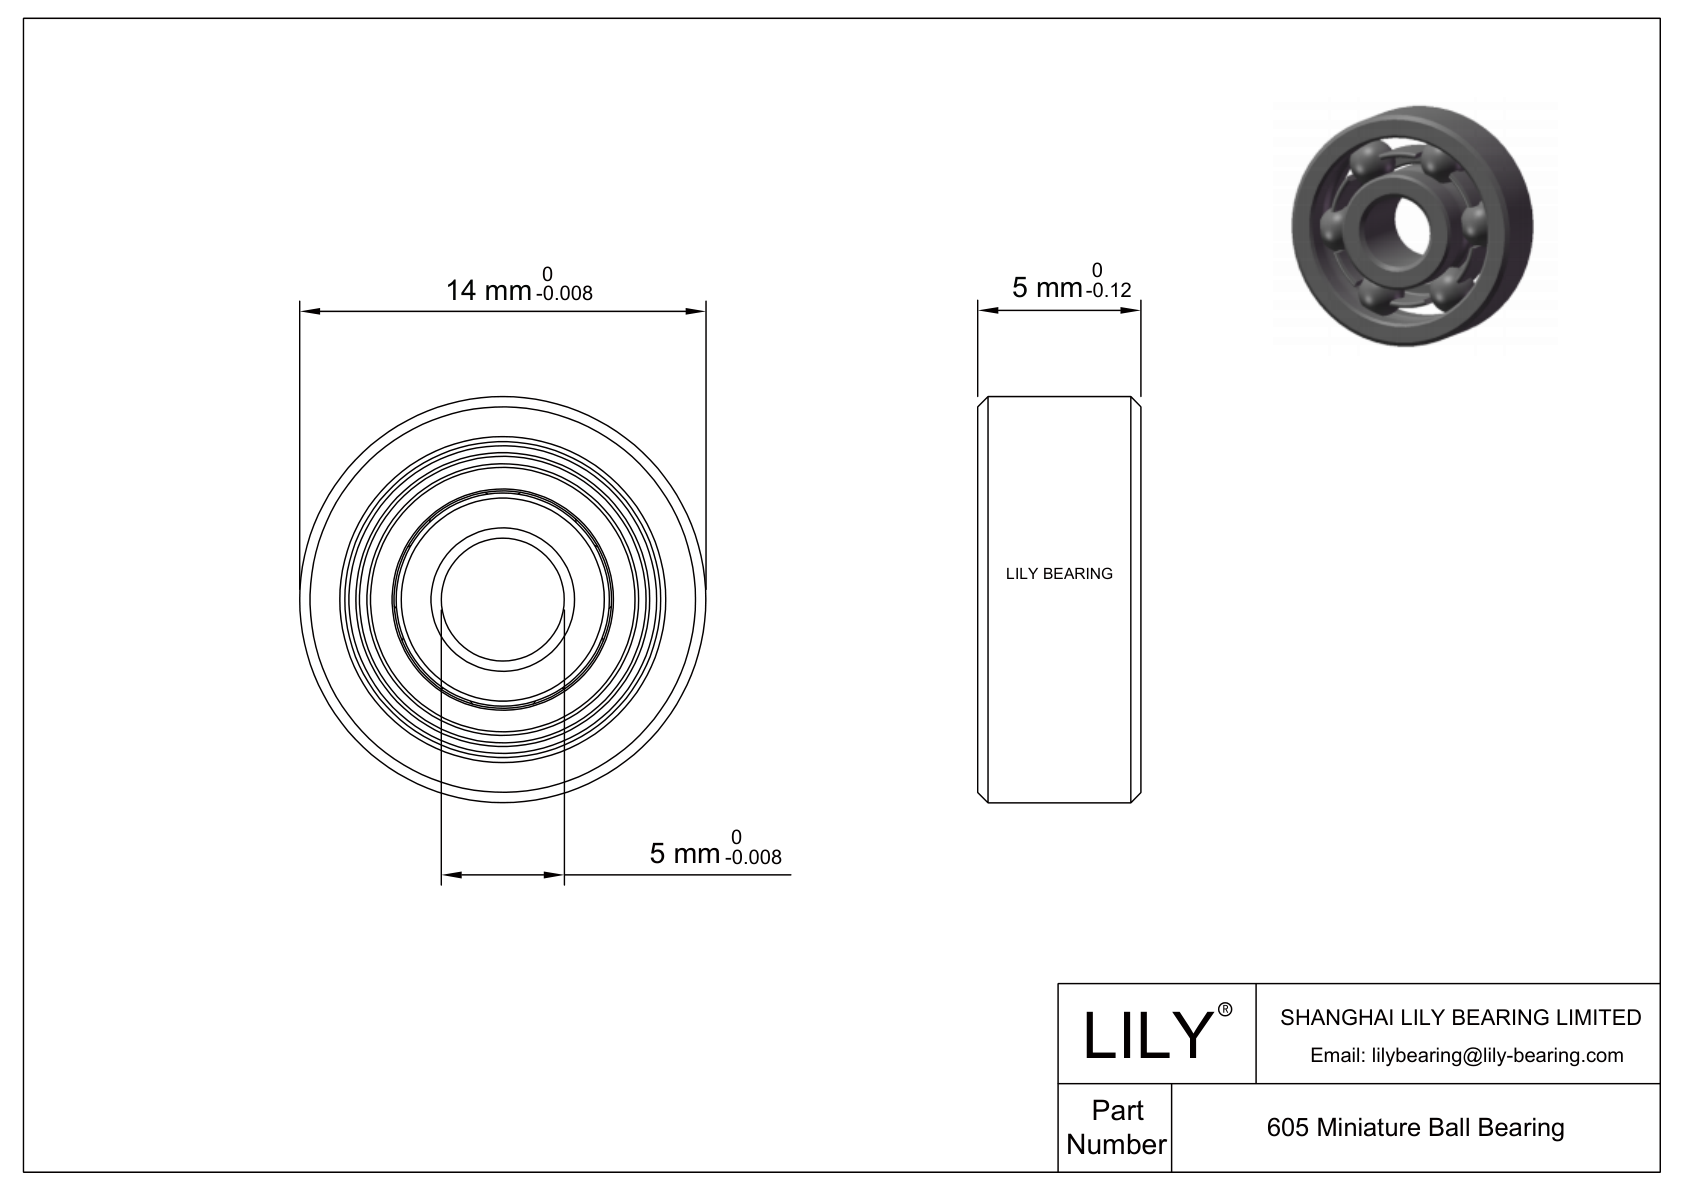 LILY-PU60519-7 Polyurethane Coated Bearing cad drawing